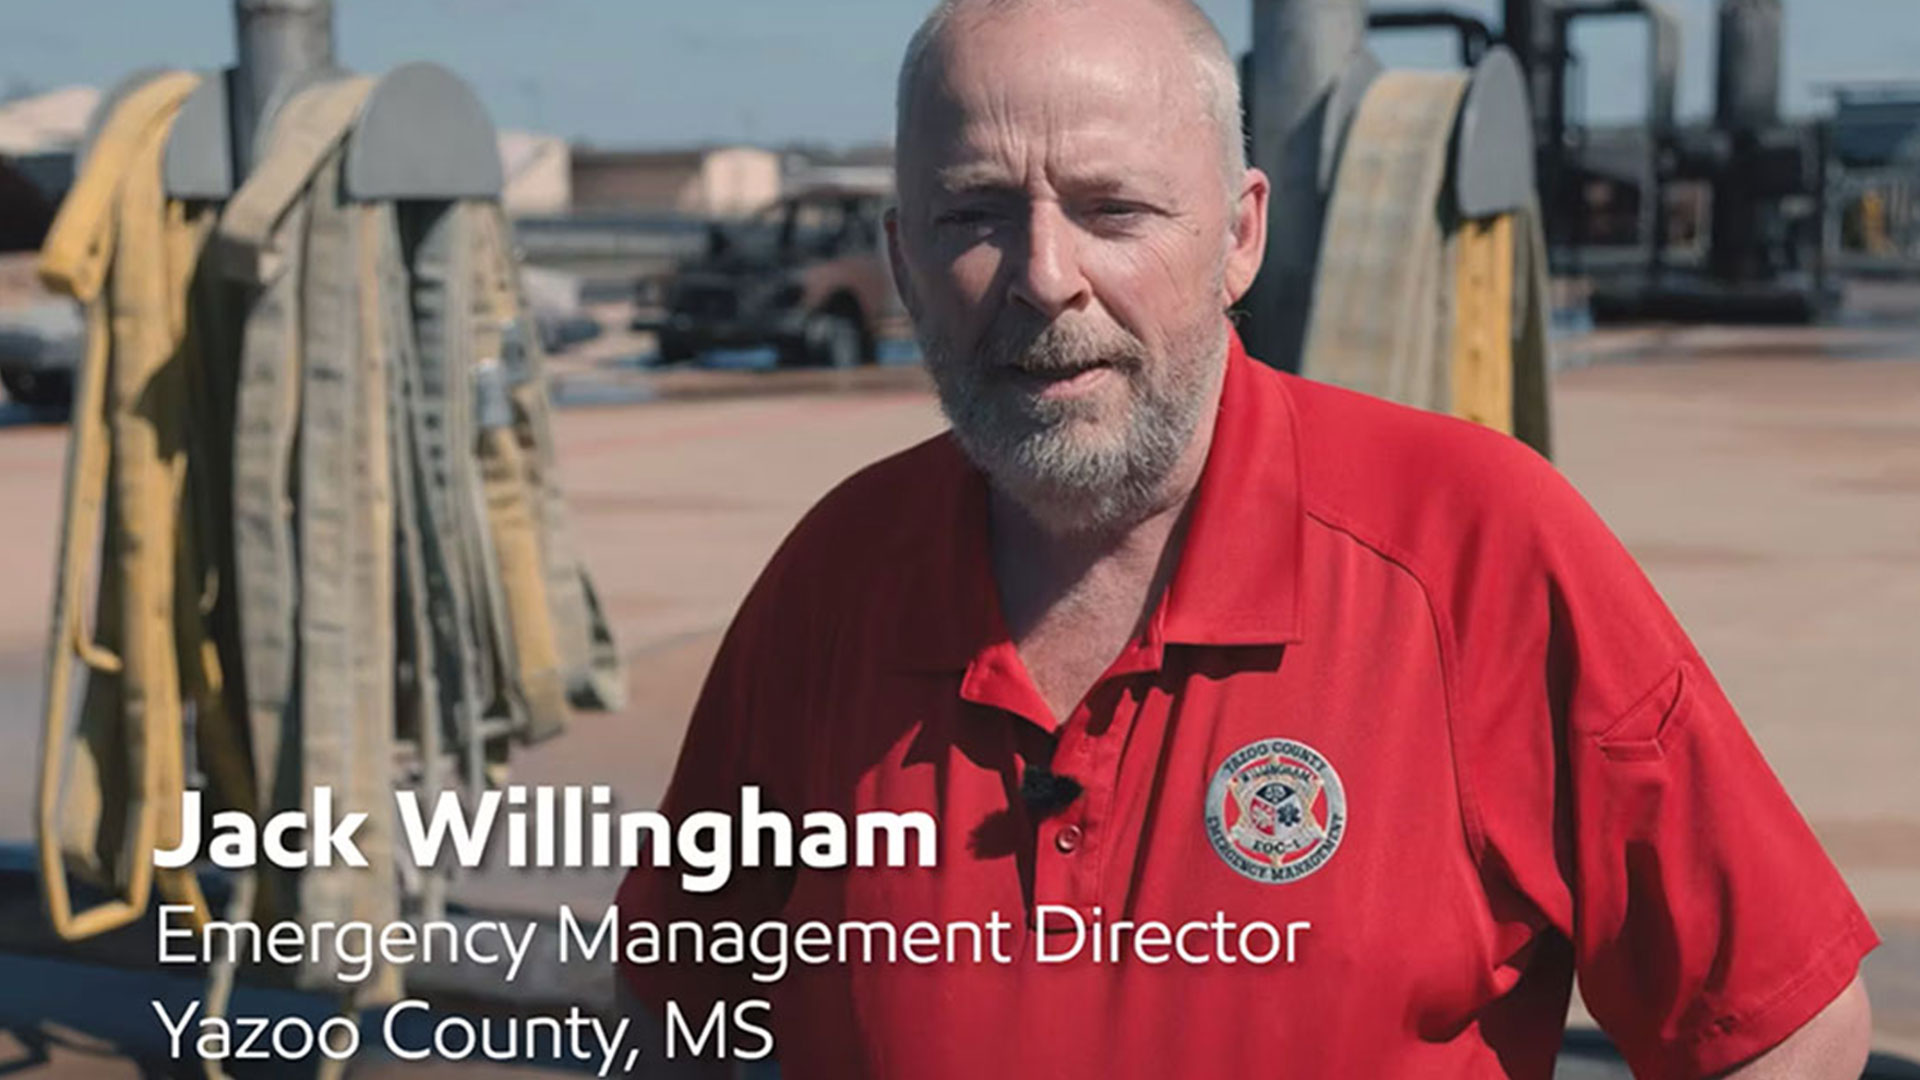 Jack Willingham testimonial video